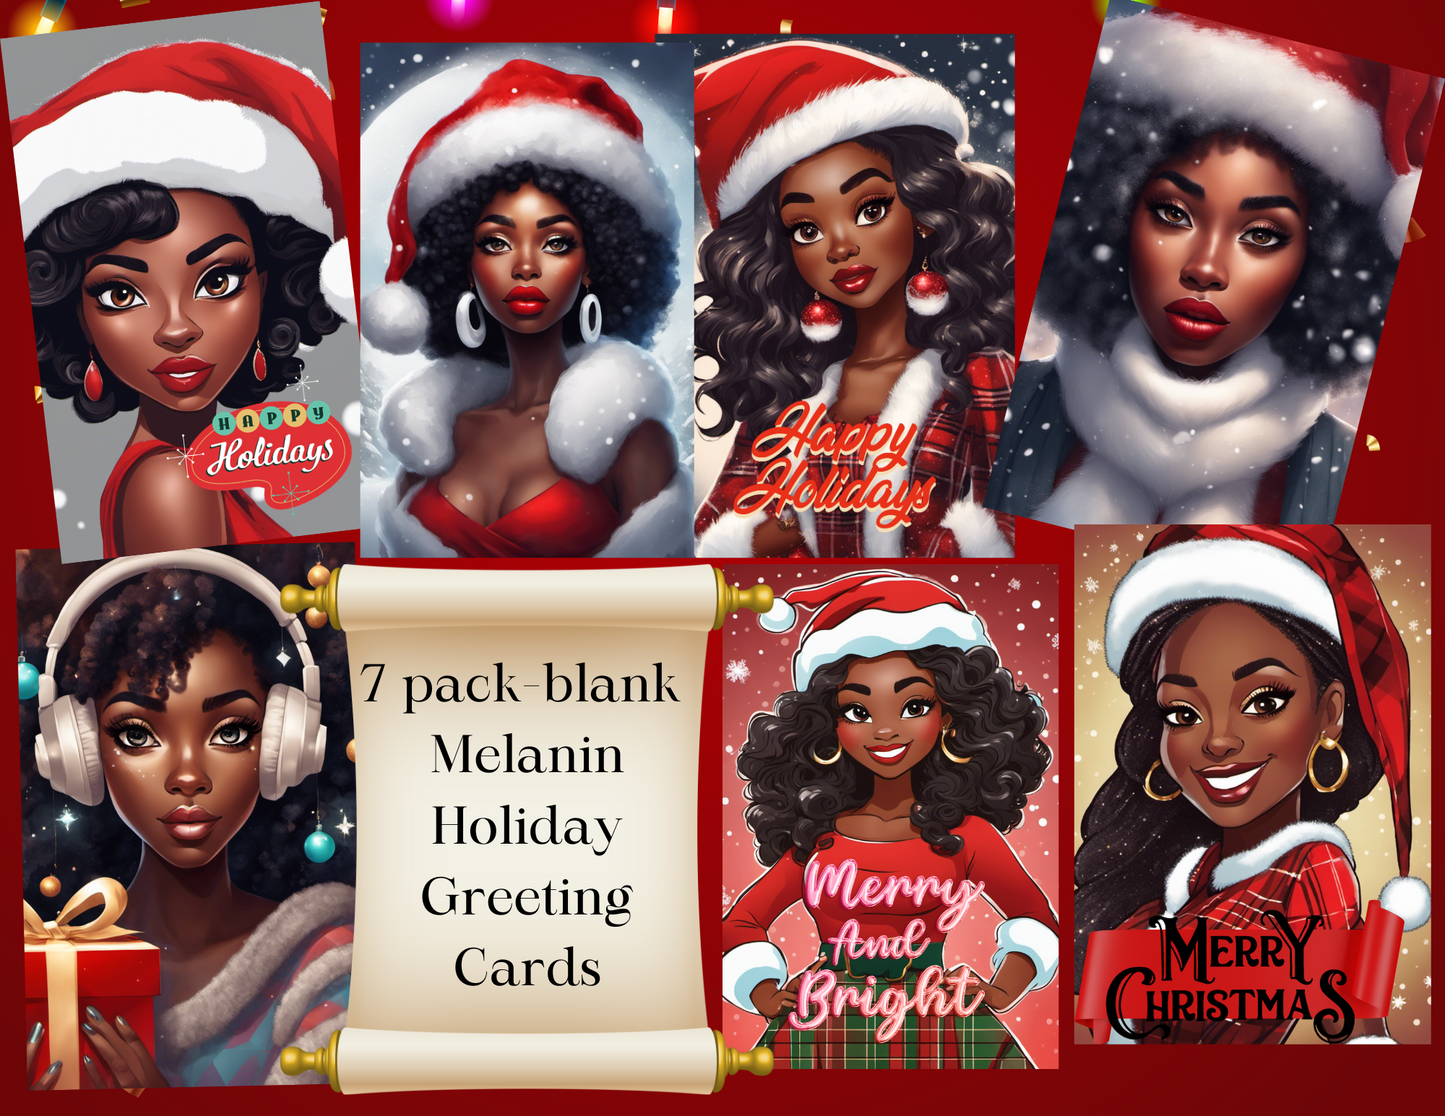 7 pack Melanin Holiday greeting cards